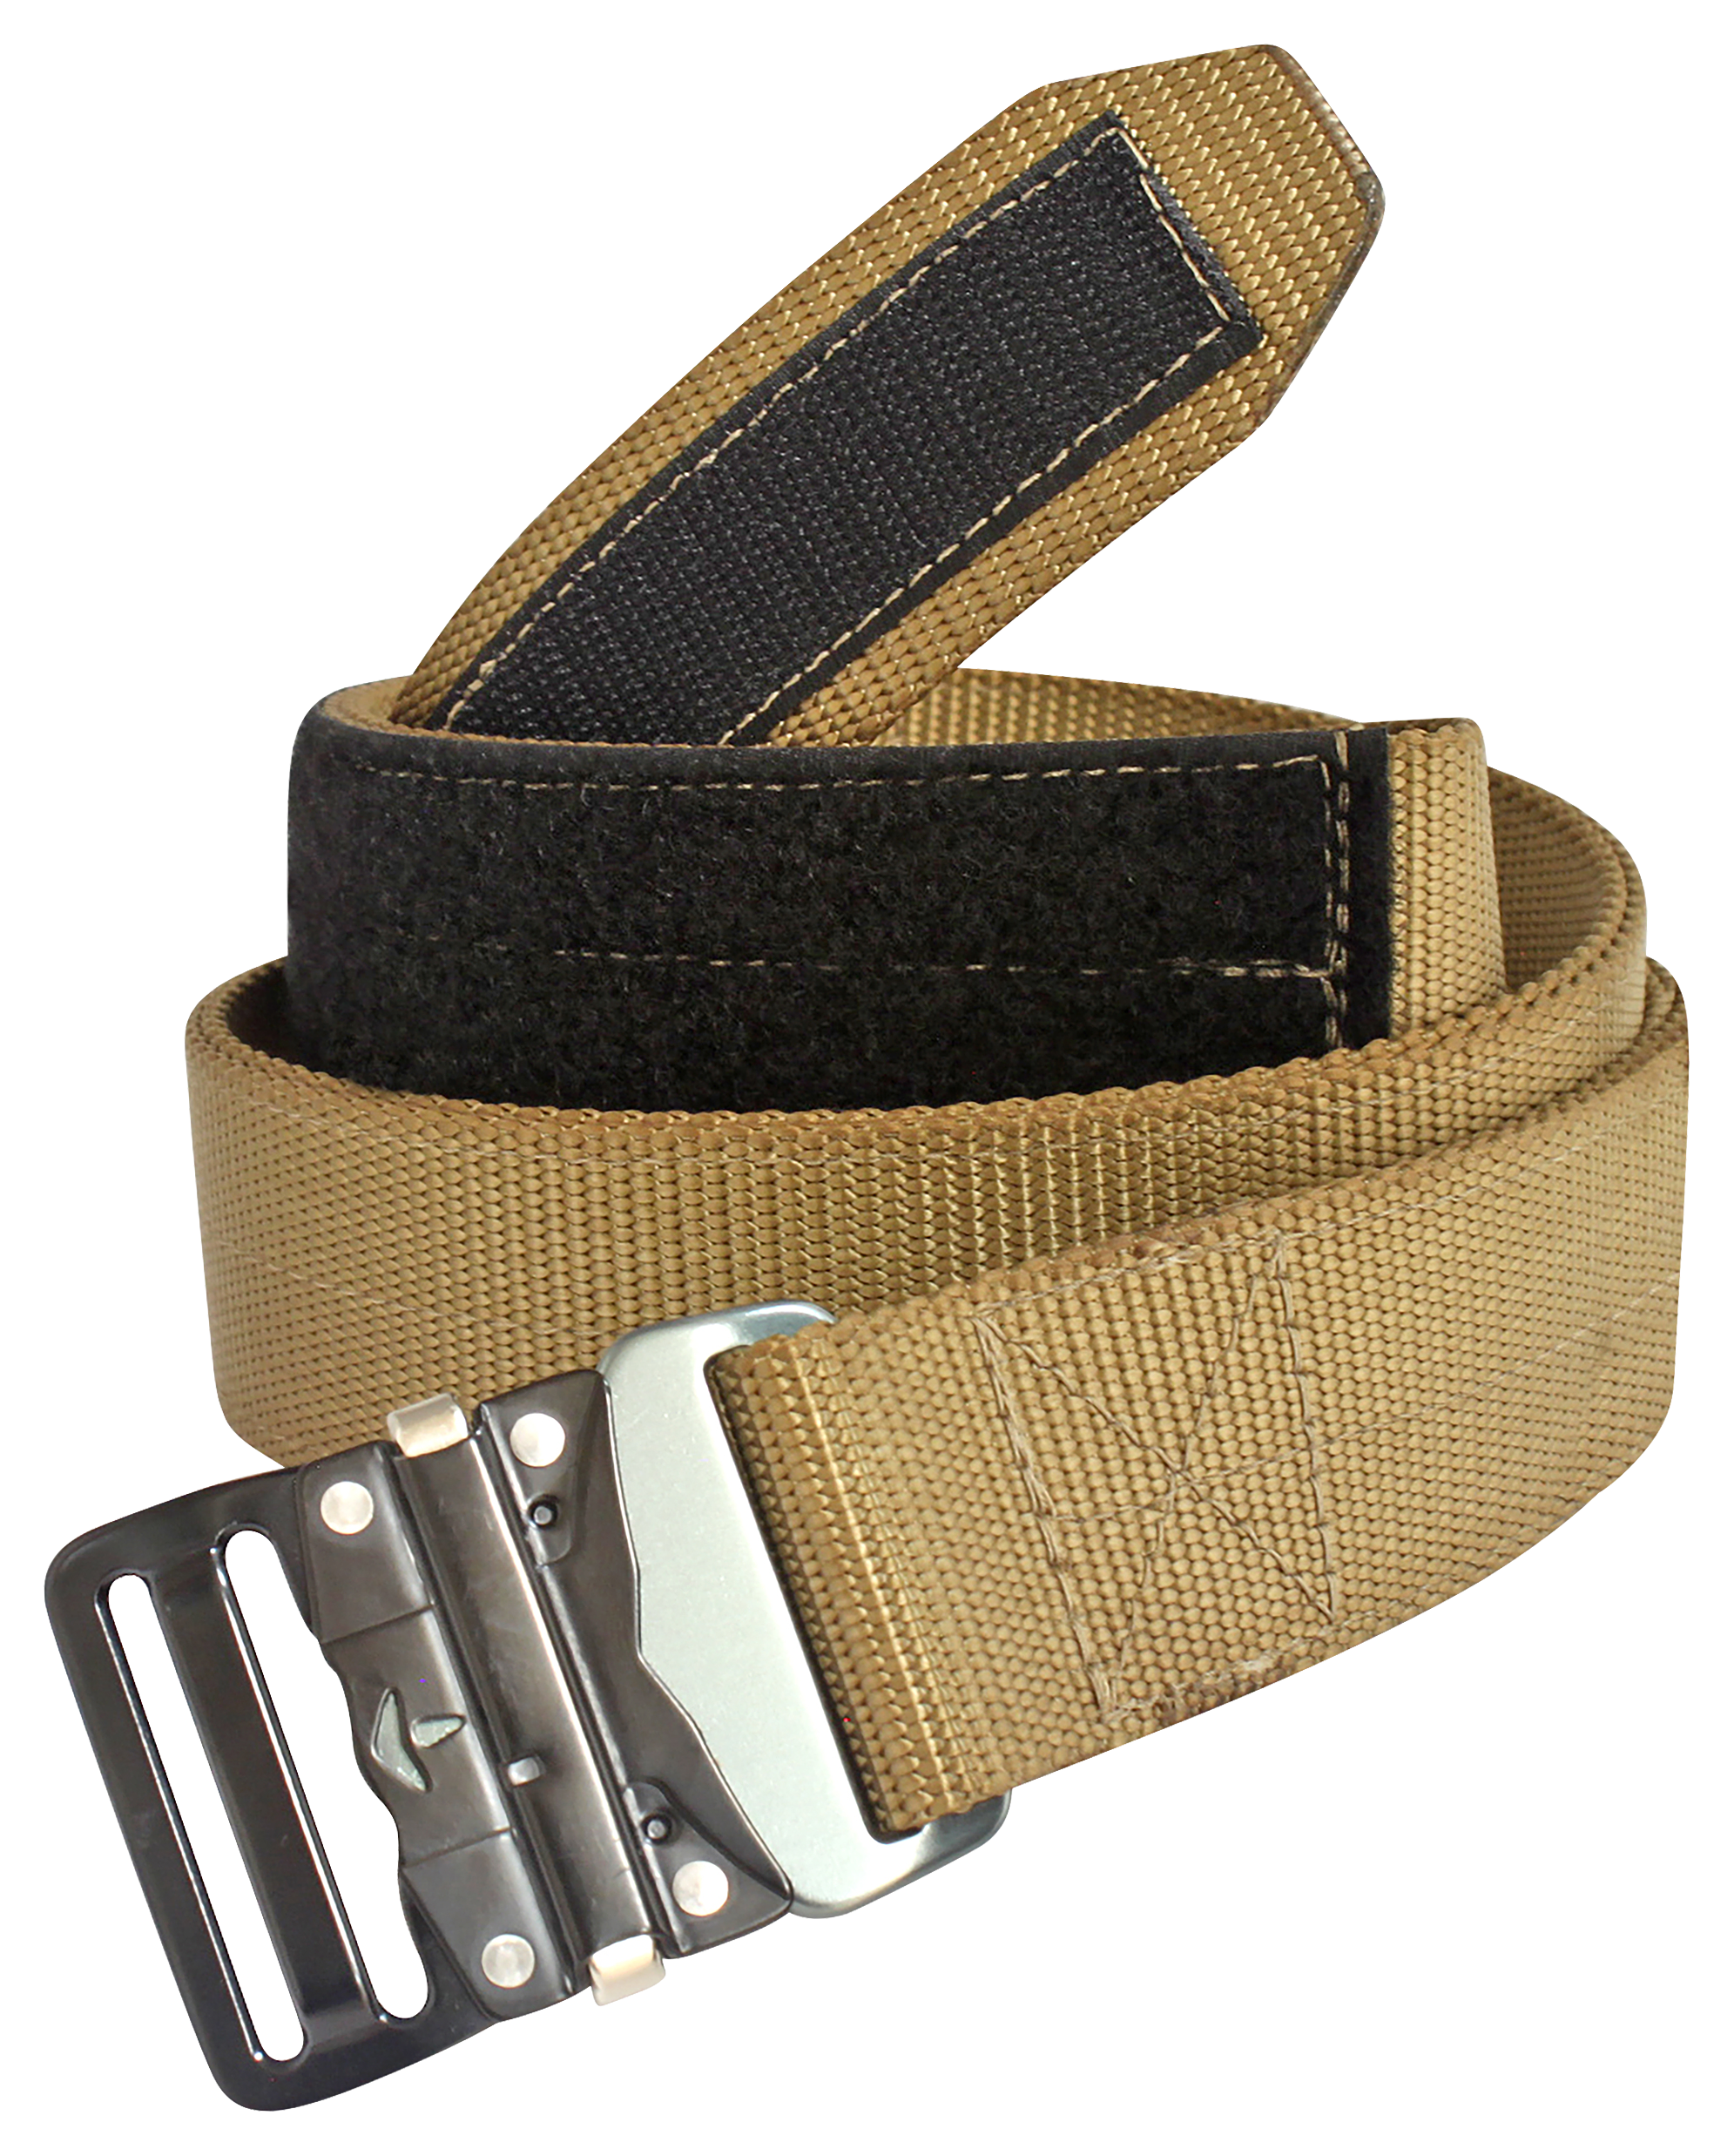 Bison Designs LoPro Heavy-Duty Buckle Belt for Men - Coyote Brown - M